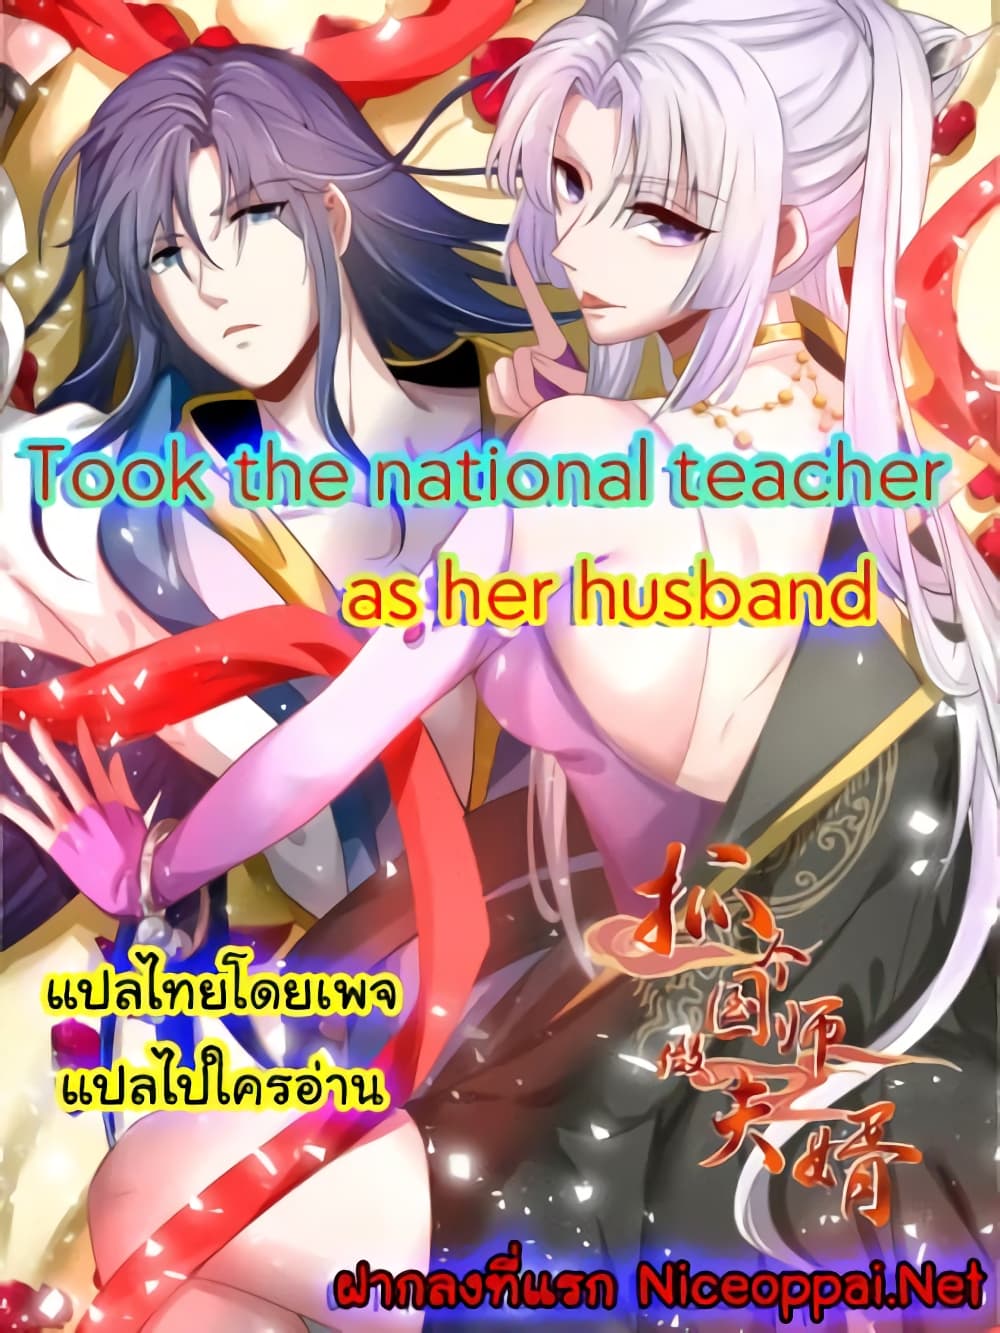 Took the National Teacher as Her Husband 23 (1)